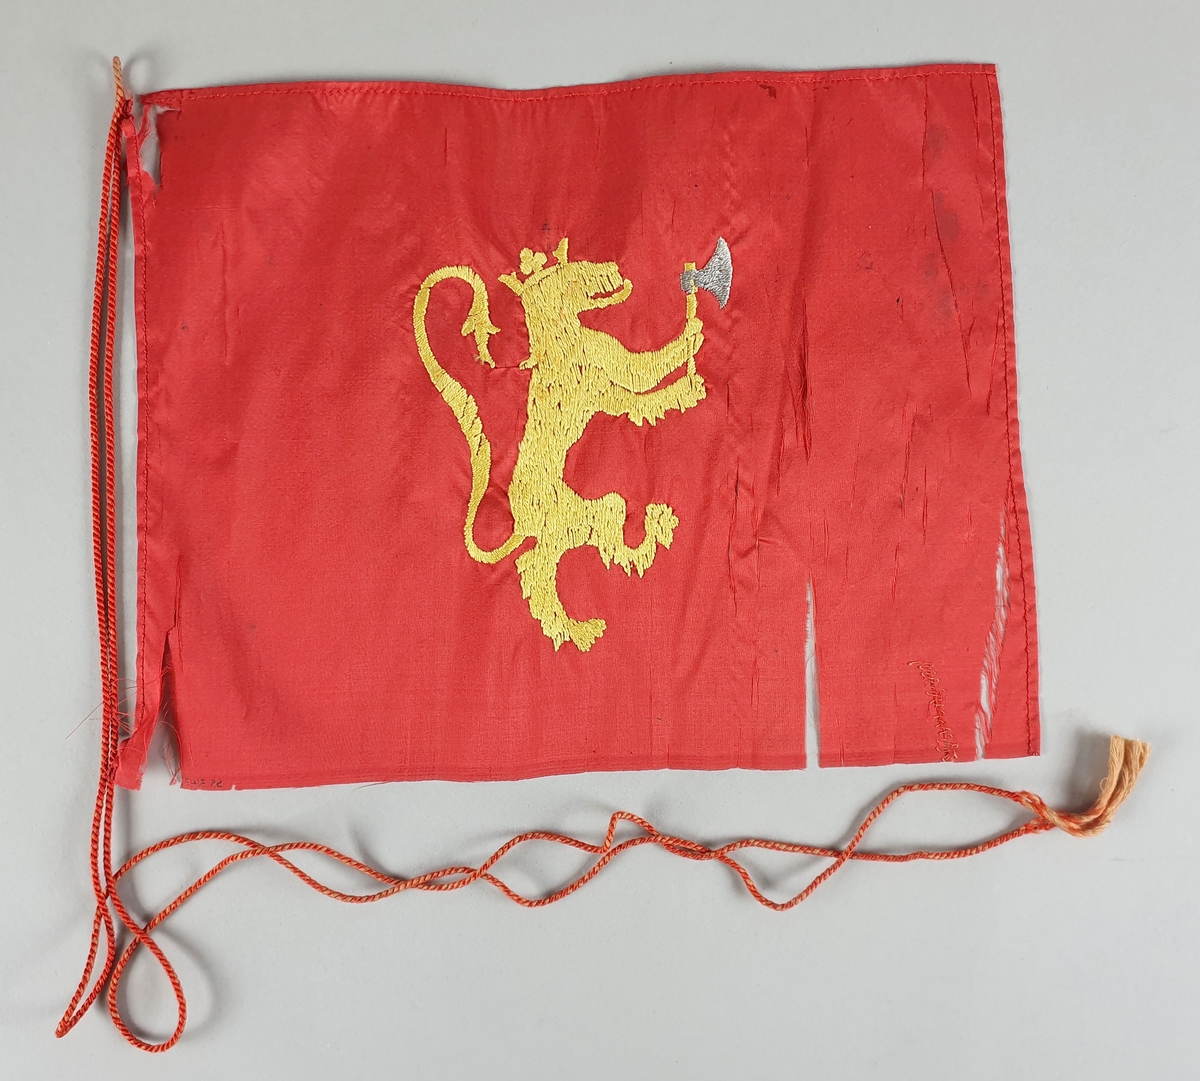 Rødt silkeflagg med brodert løve i gult. Handfallet kant på tre sider, jarekant på en side. I overkant en tvunnen snor